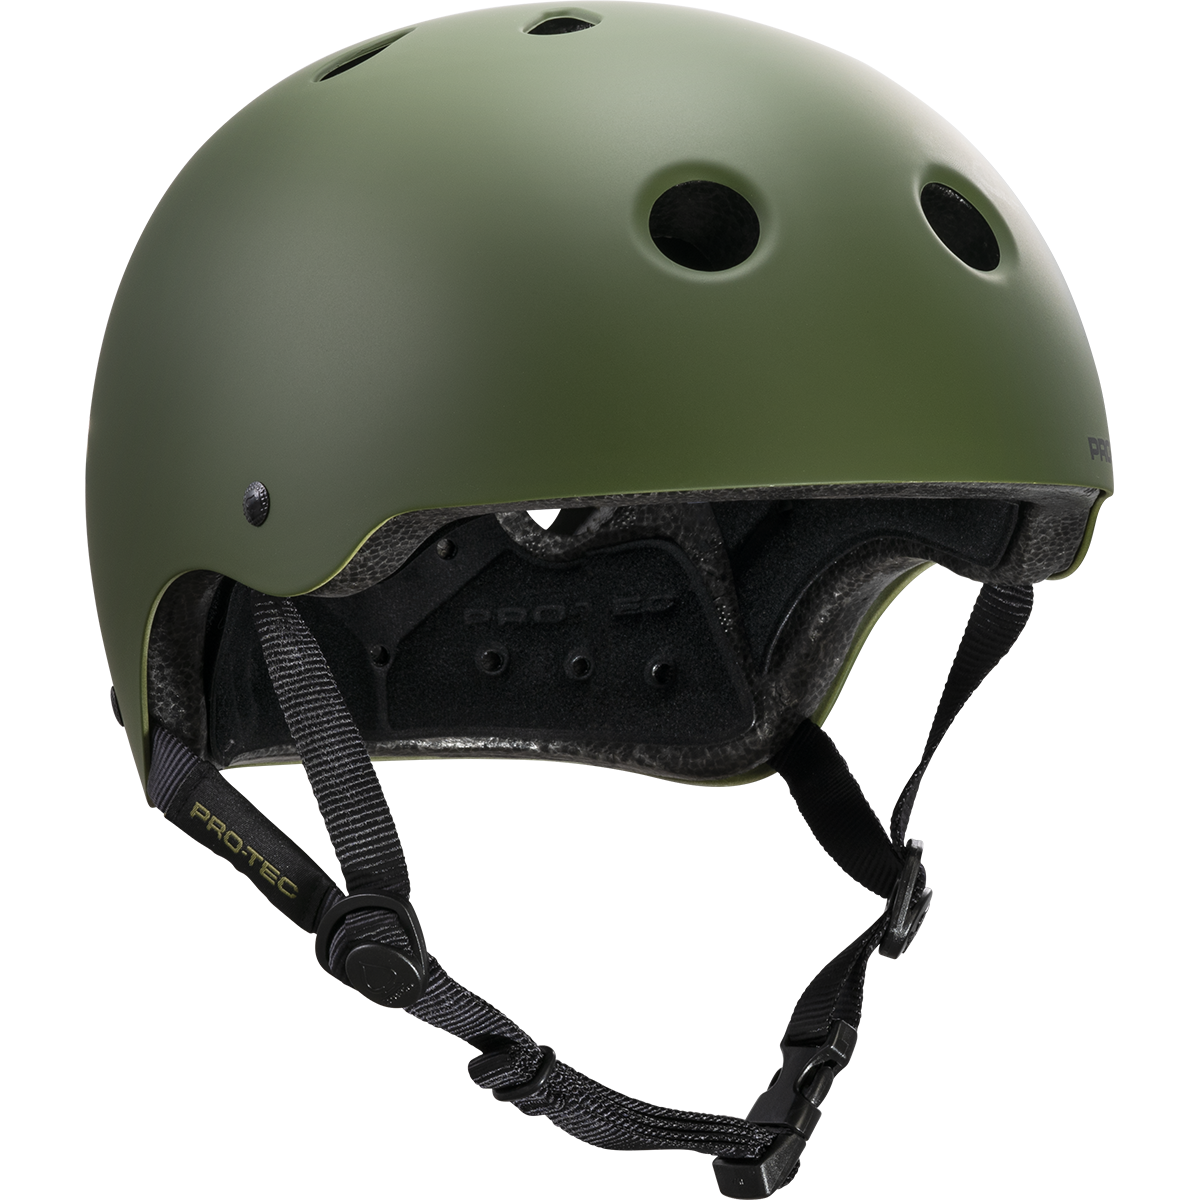 Pro-tec Classic Certified Skate Helmet - Matte Olive